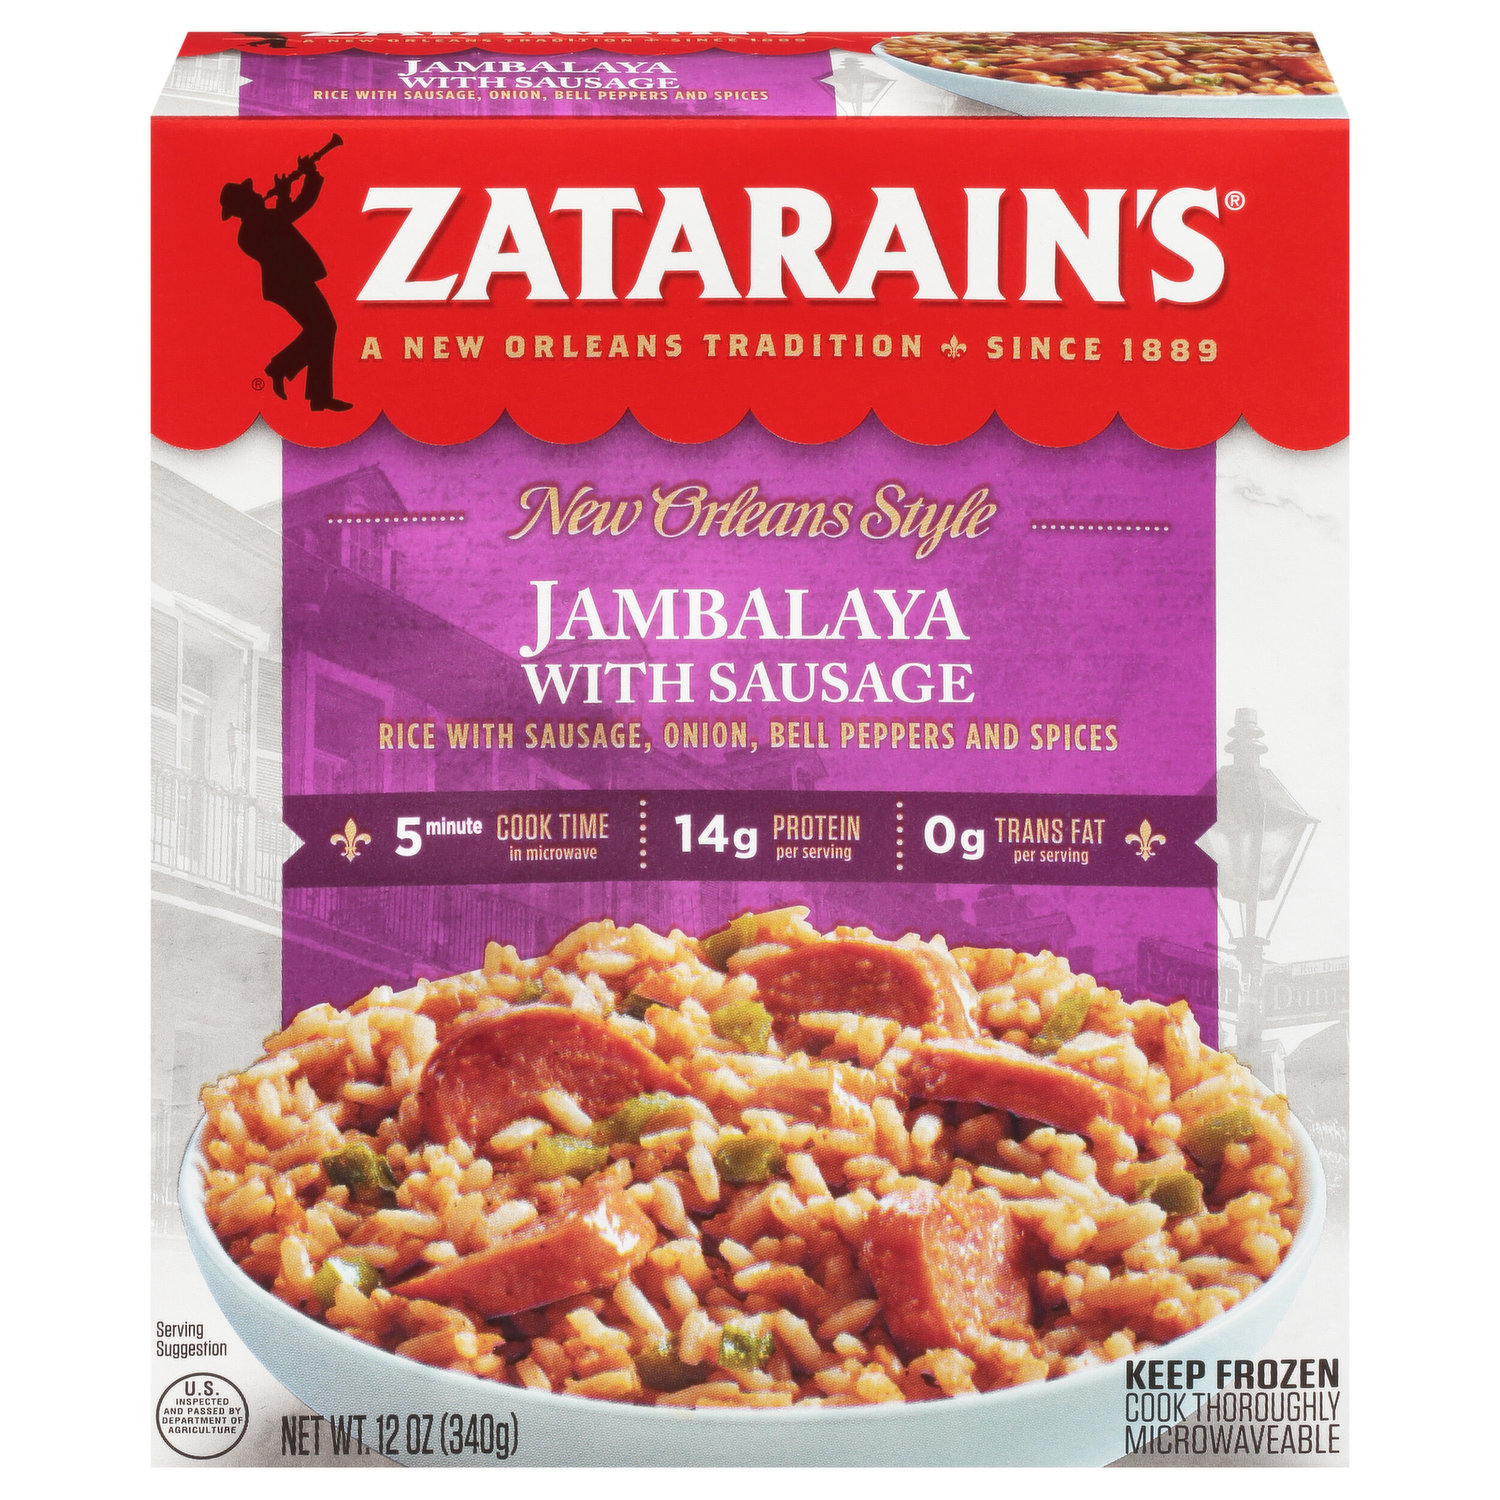 Zatarain's Frozen Blackened Chicken Alfredo (60 oz.) – Openbax